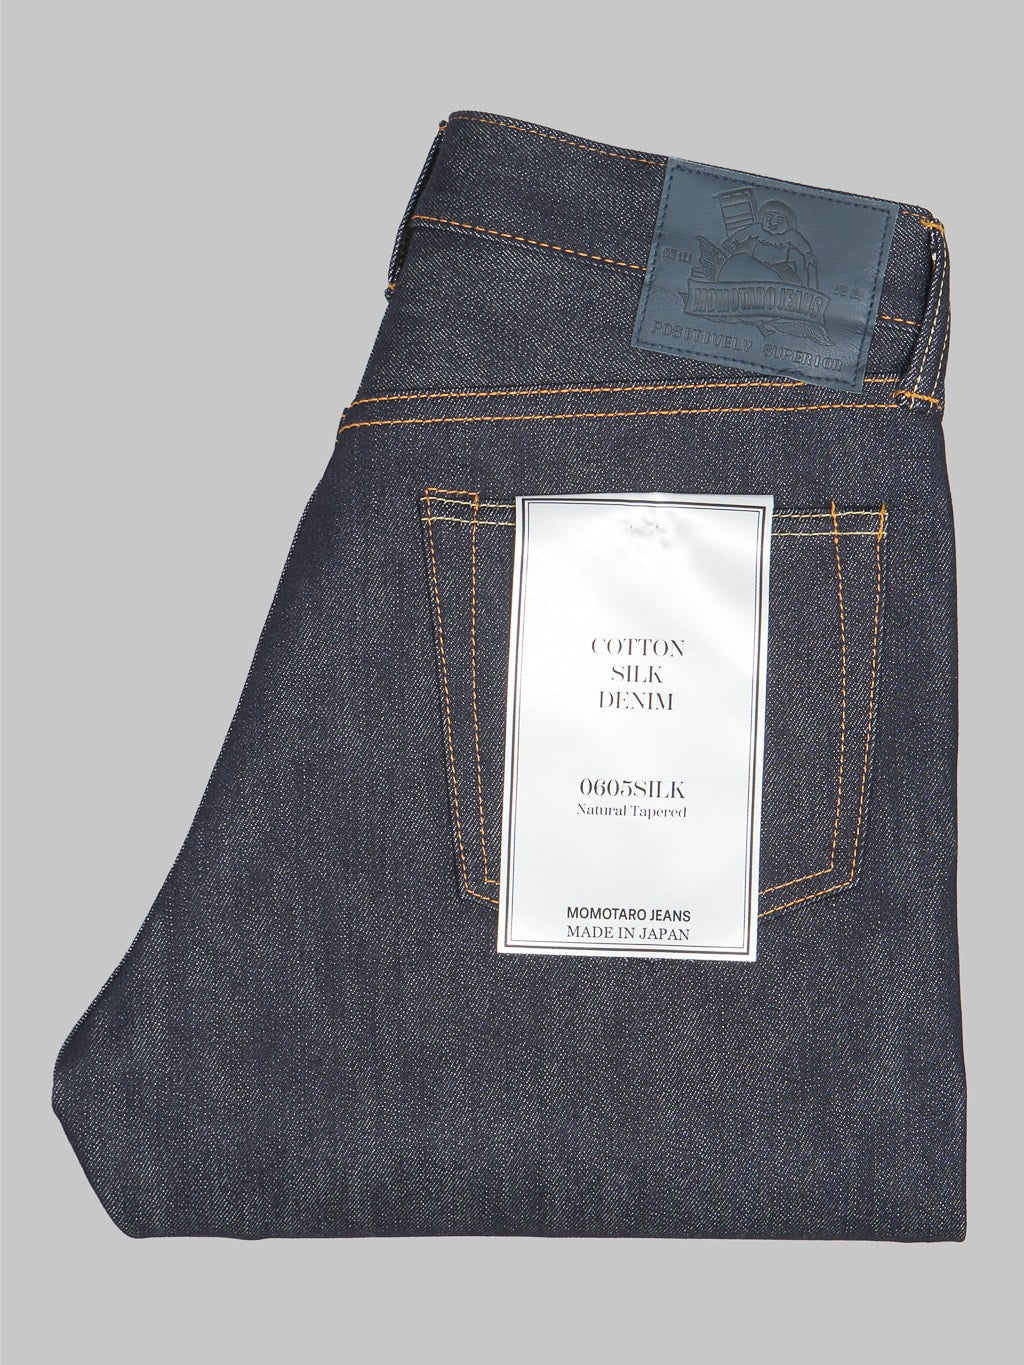 Momotaro 0605SILK Denim Natural Tapered Jeans japanese made